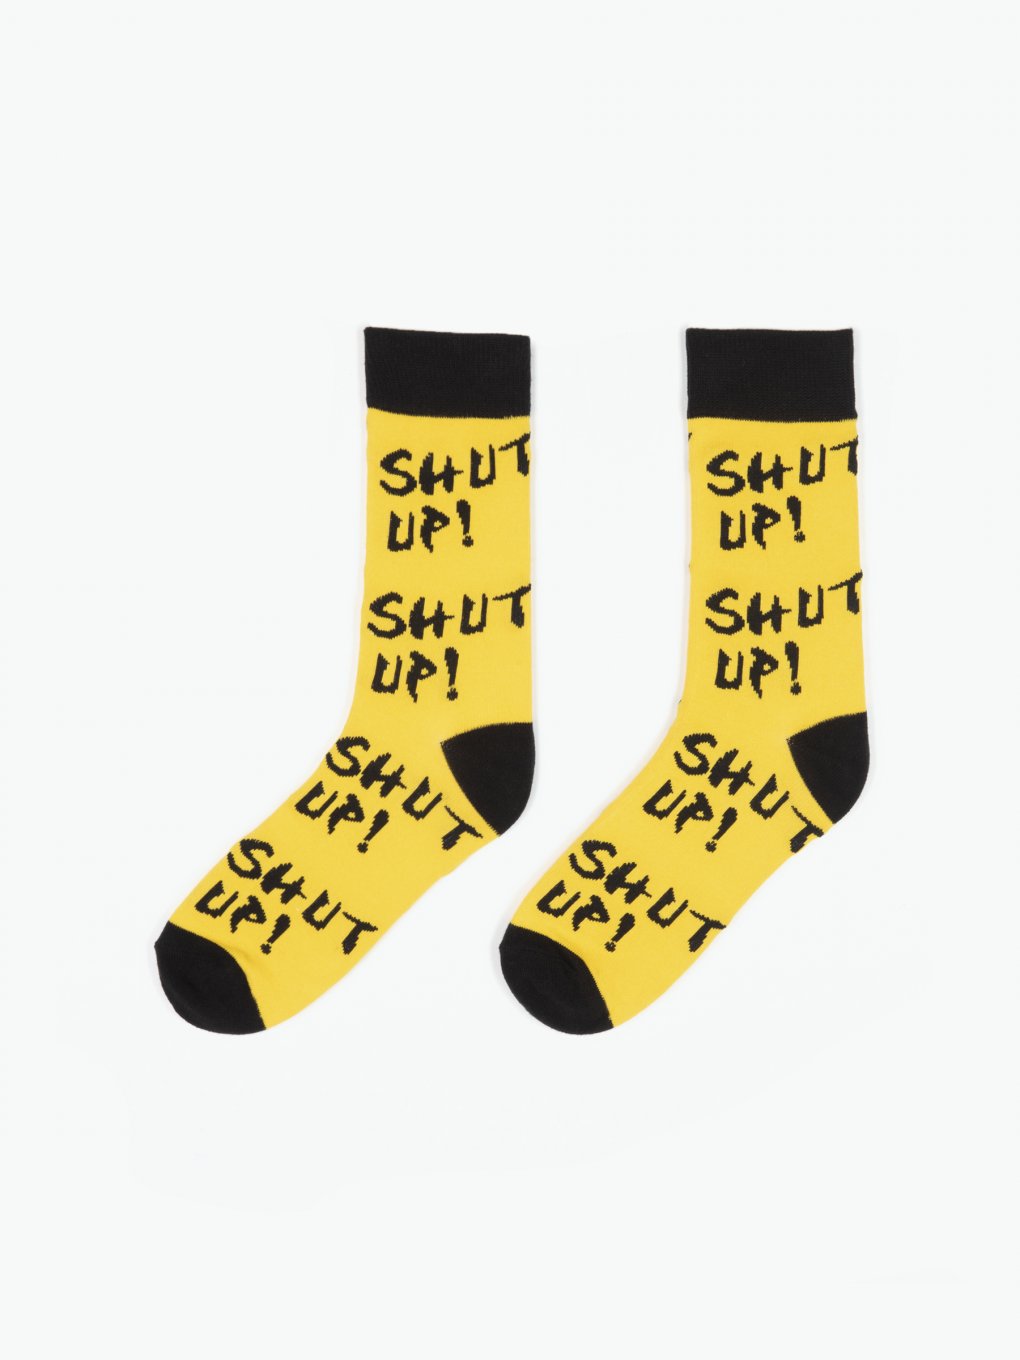 Patterned crew socks